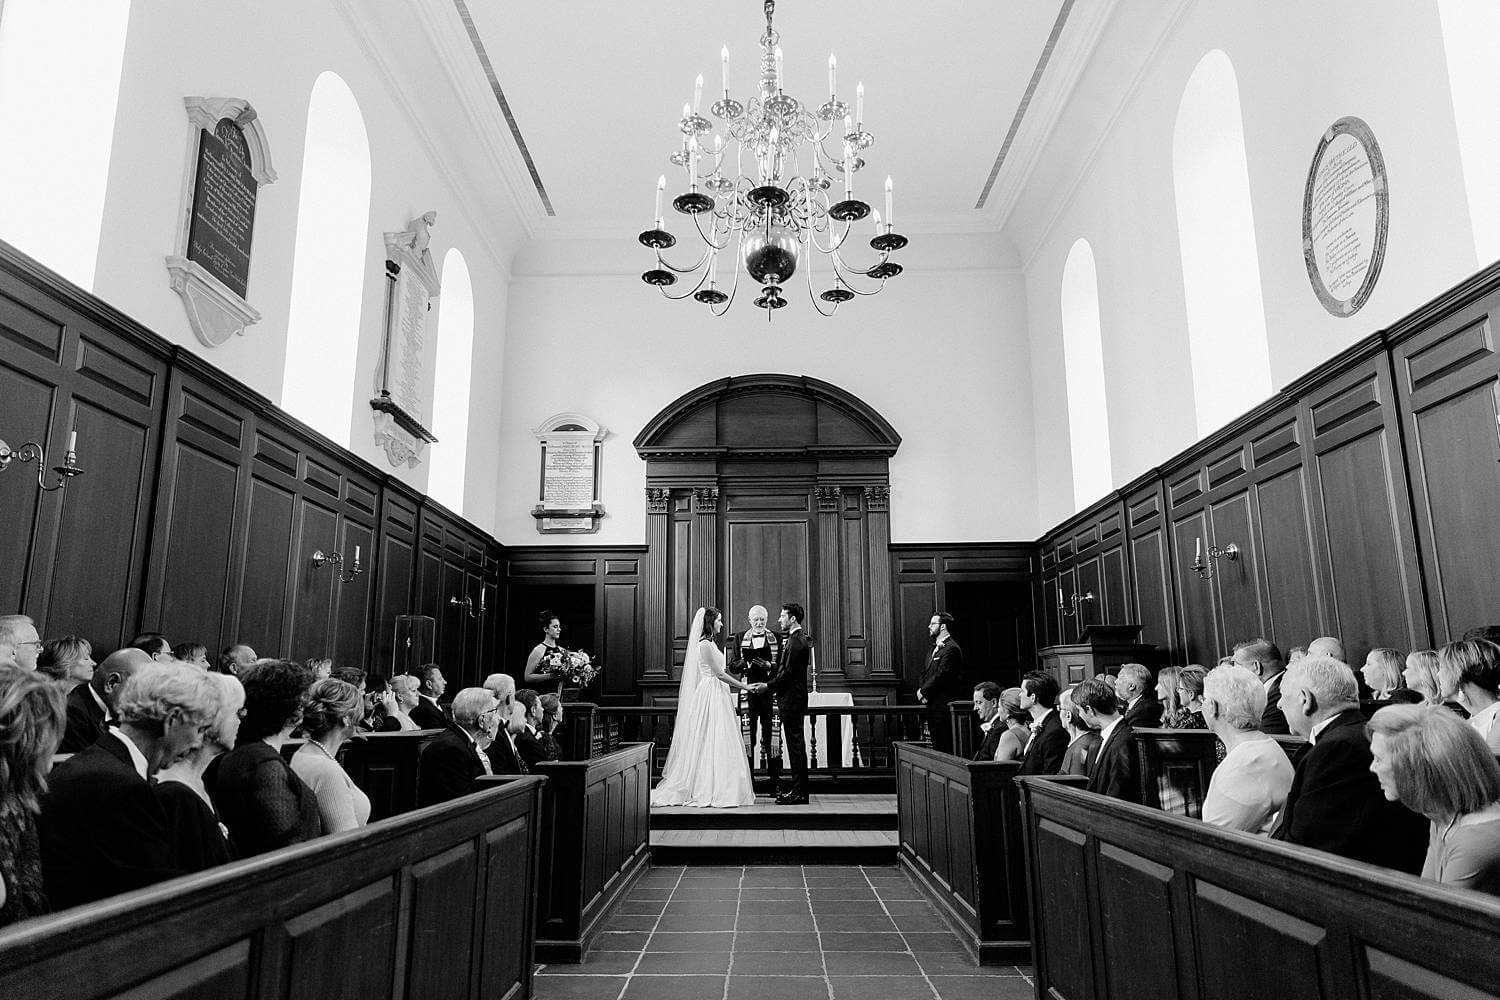 Ceremony at The Wren Chapel